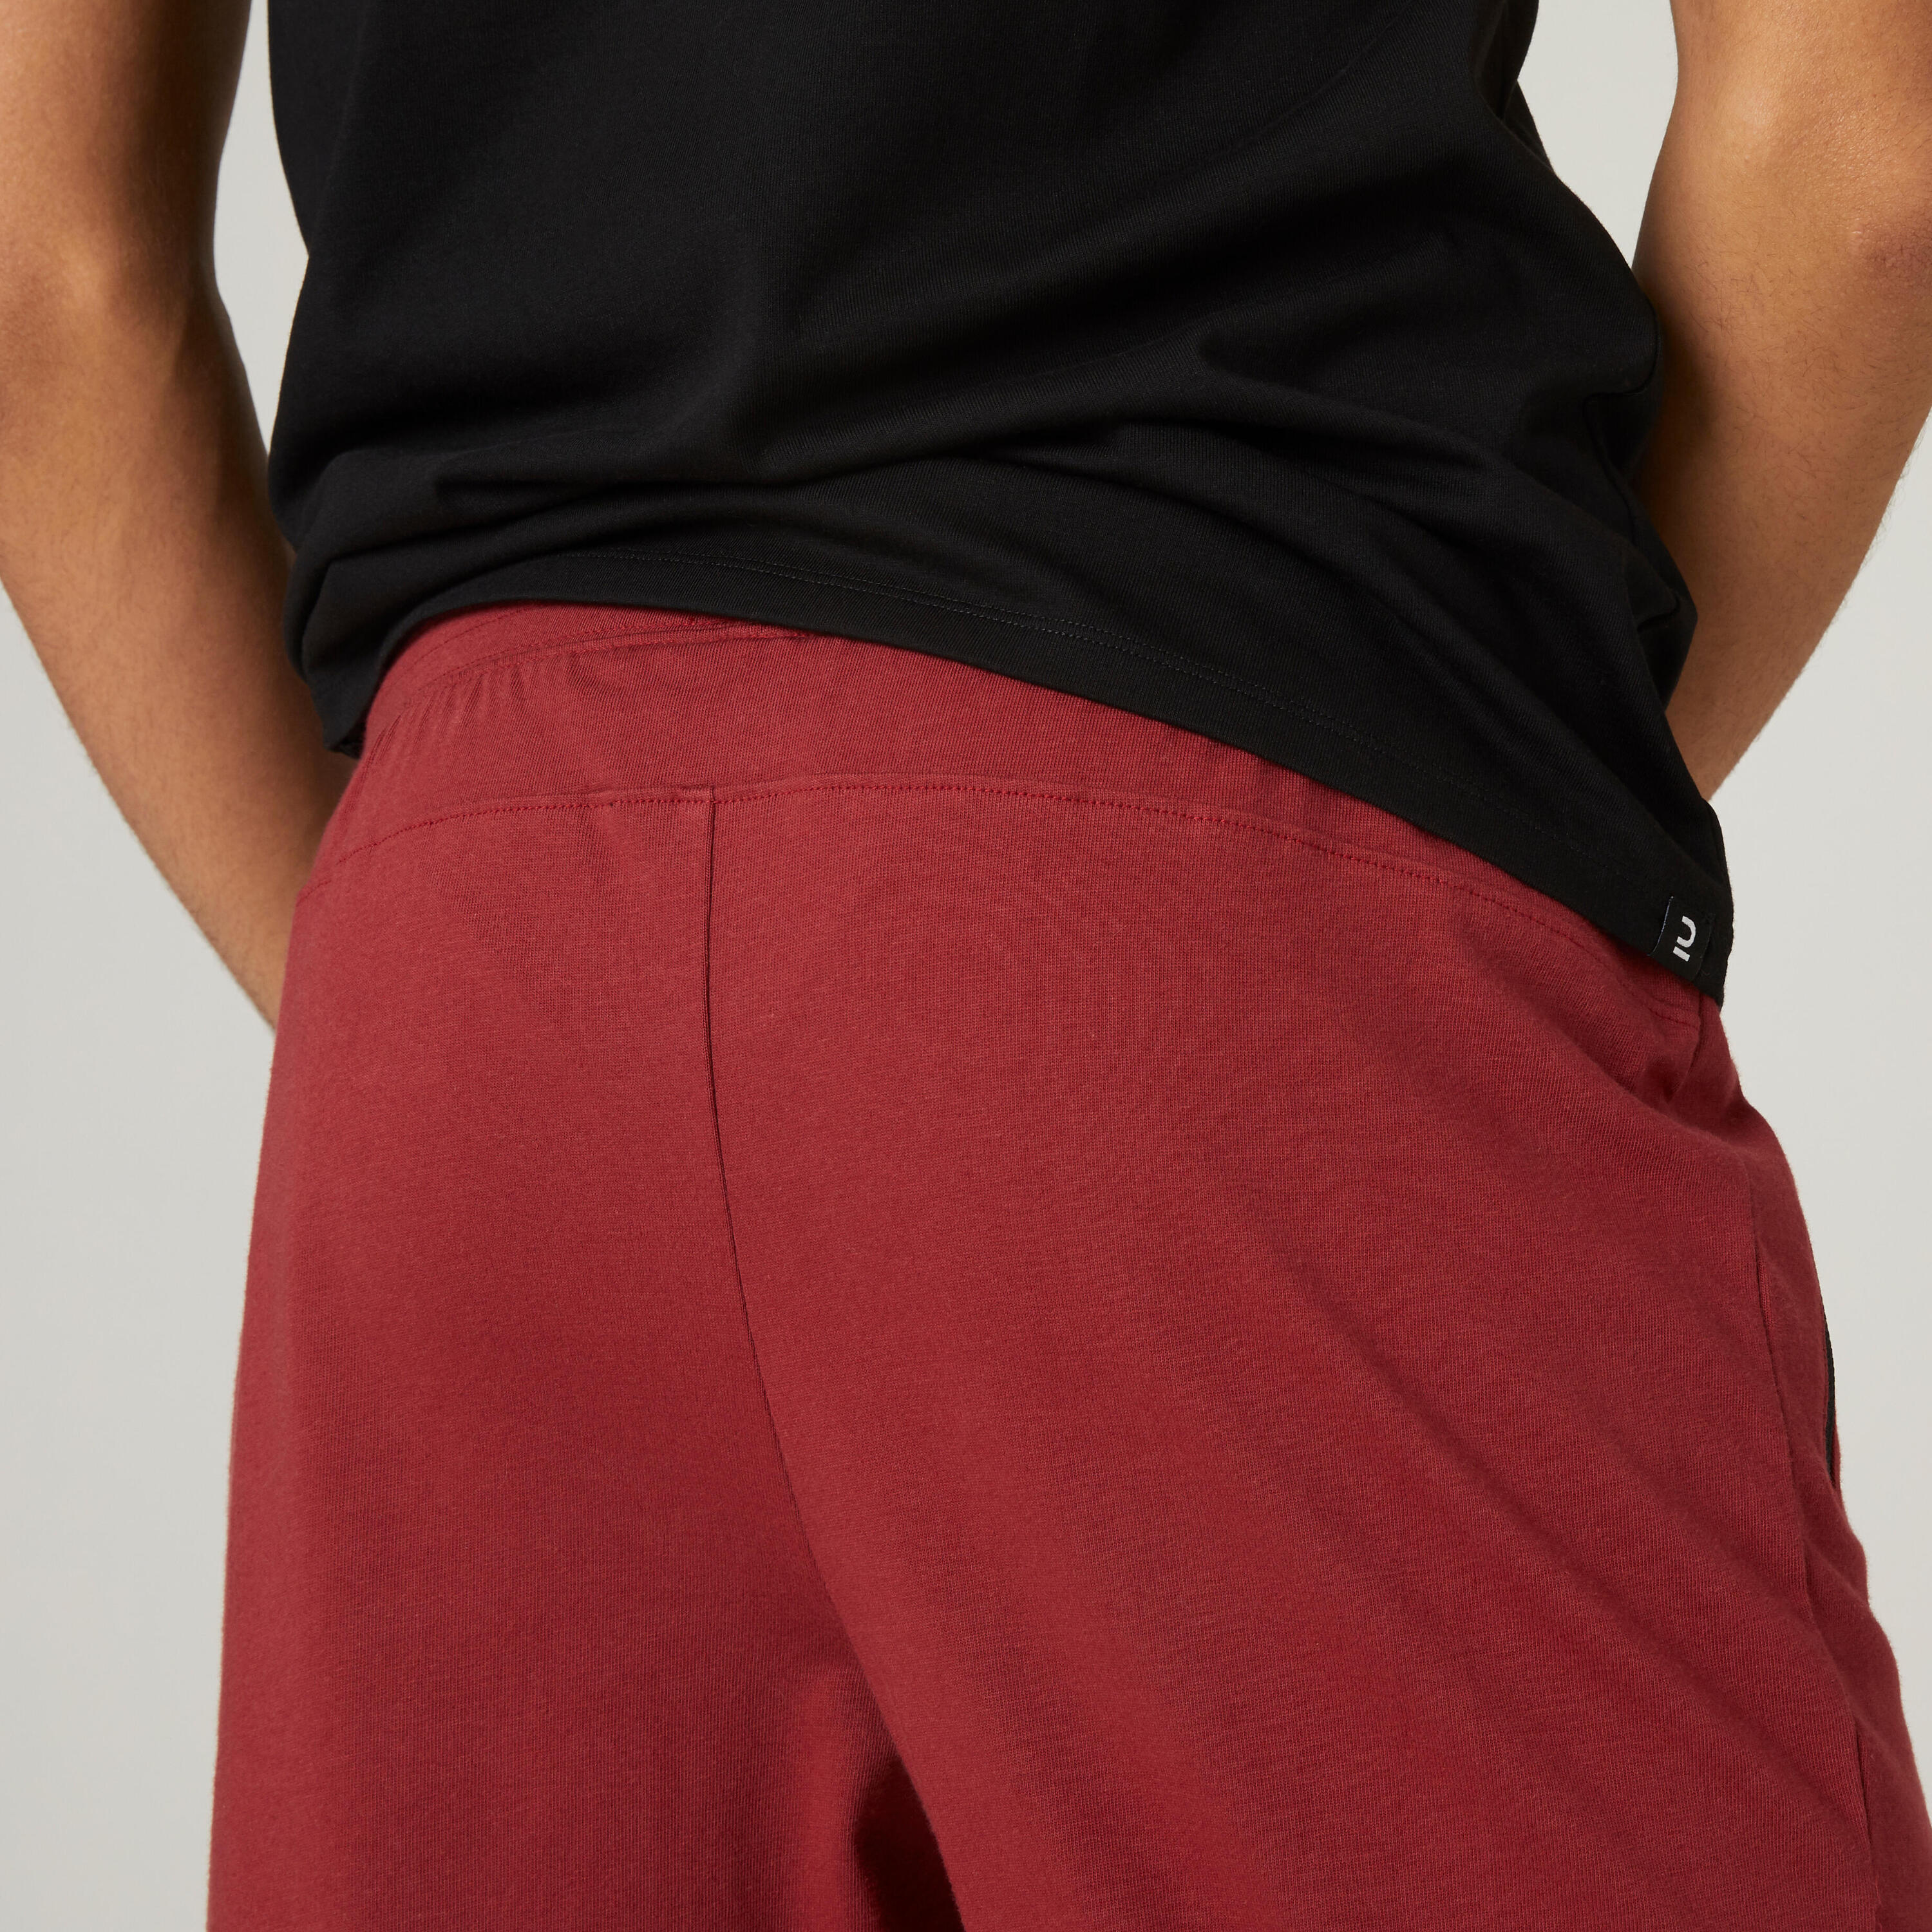 Men's Cotton Blend Shorts - Red 7/8